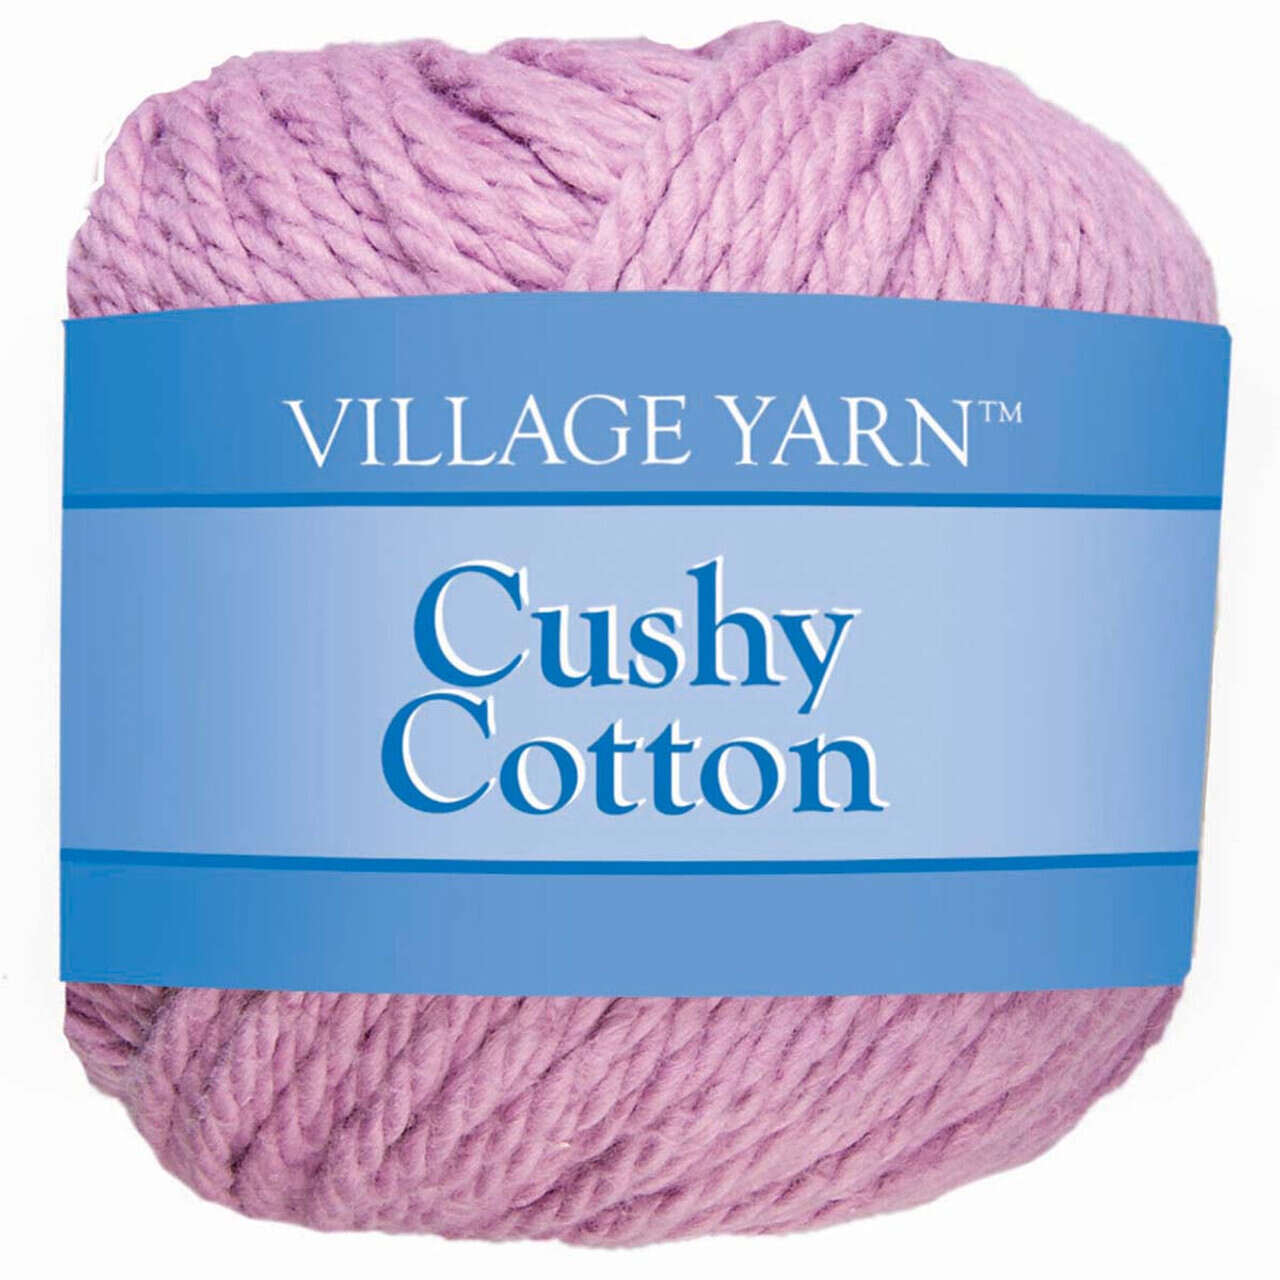 Village Yarn Cushy Cotton-Bag of 5 Yarn Pack